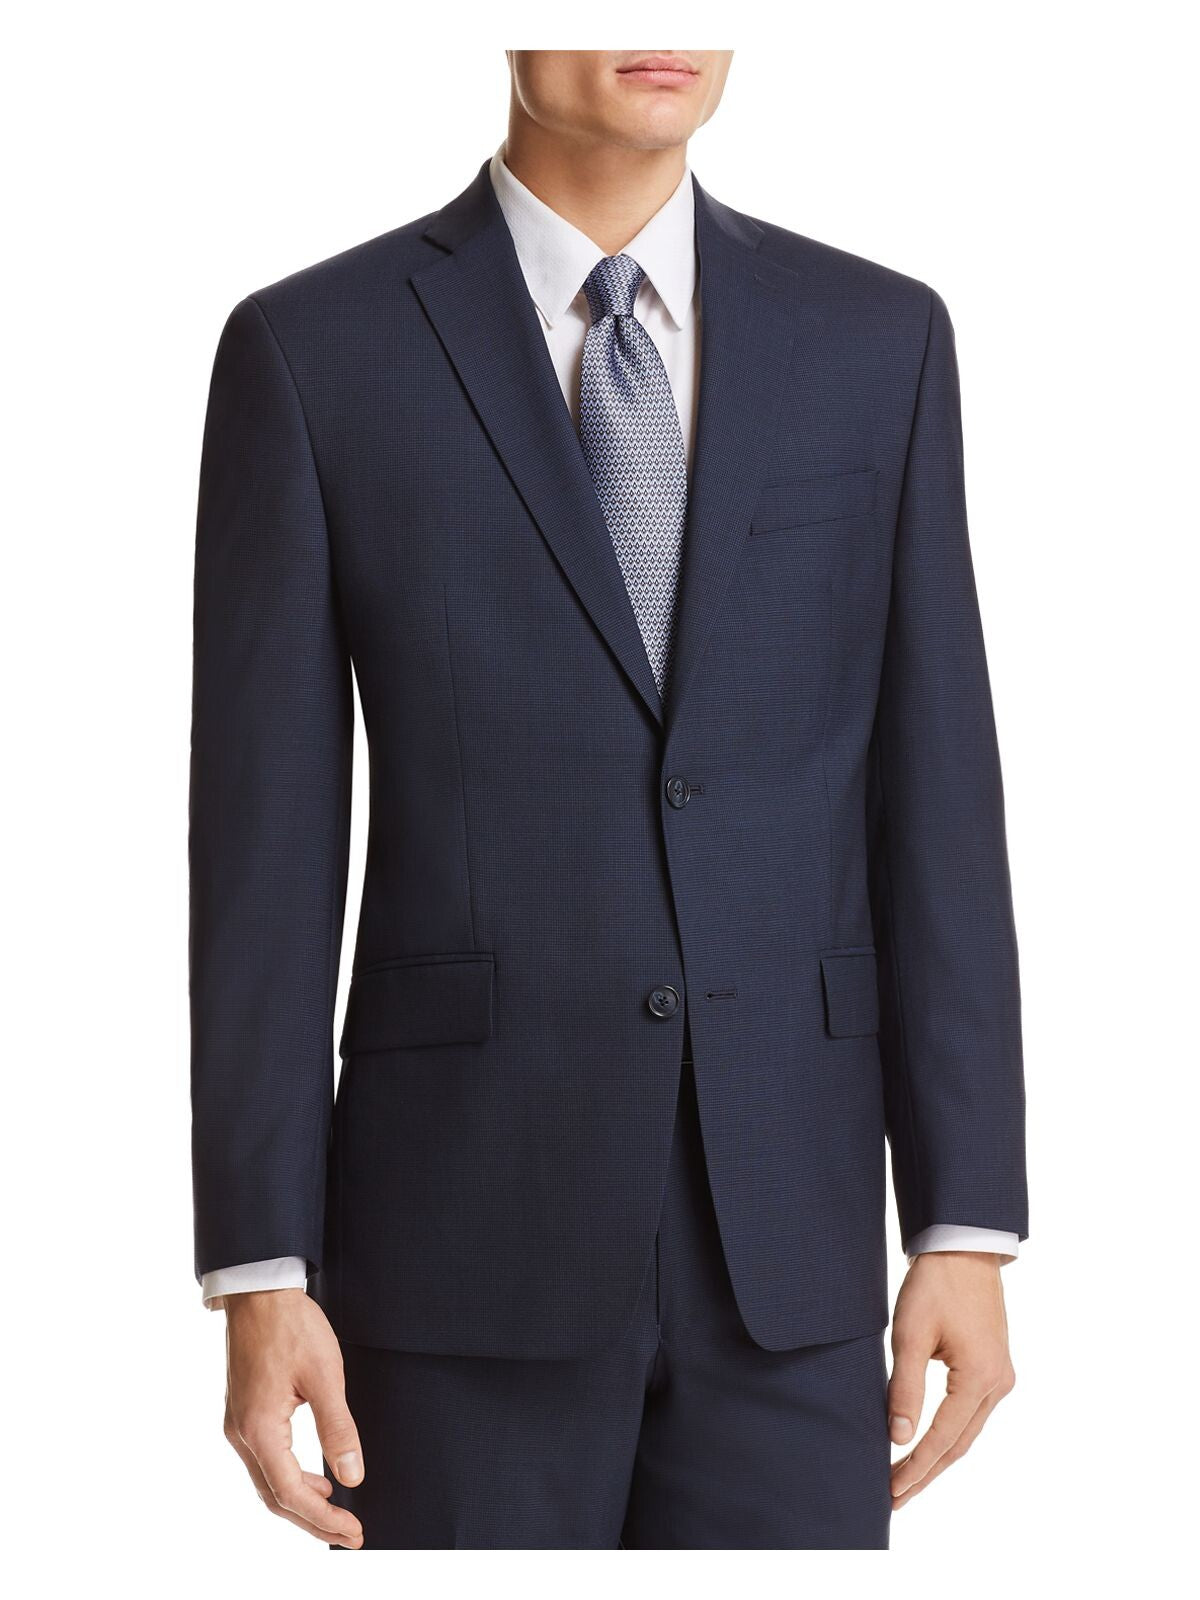 MICHAEL KORS Mens Navy Single Breasted, Classic Fit Wool Blend Suit Separate Blazer Jacket 42 SHORT